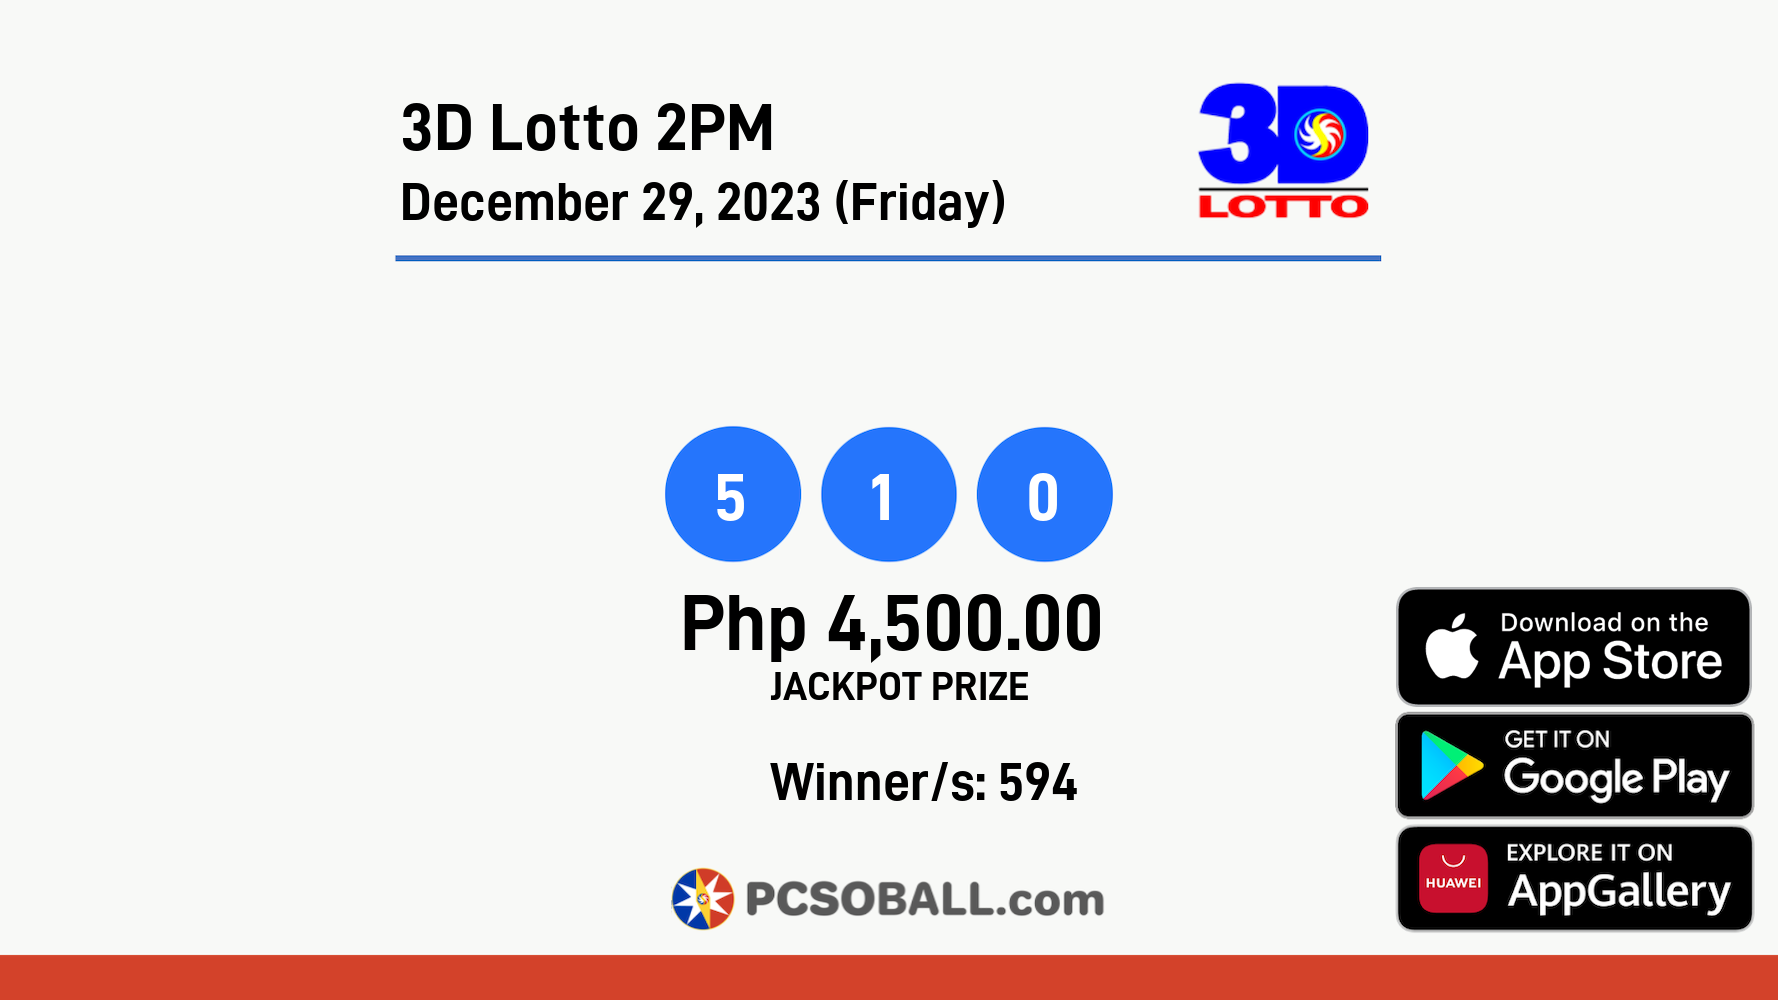 3D Lotto 2PM December 29, 2023 (Friday) Result